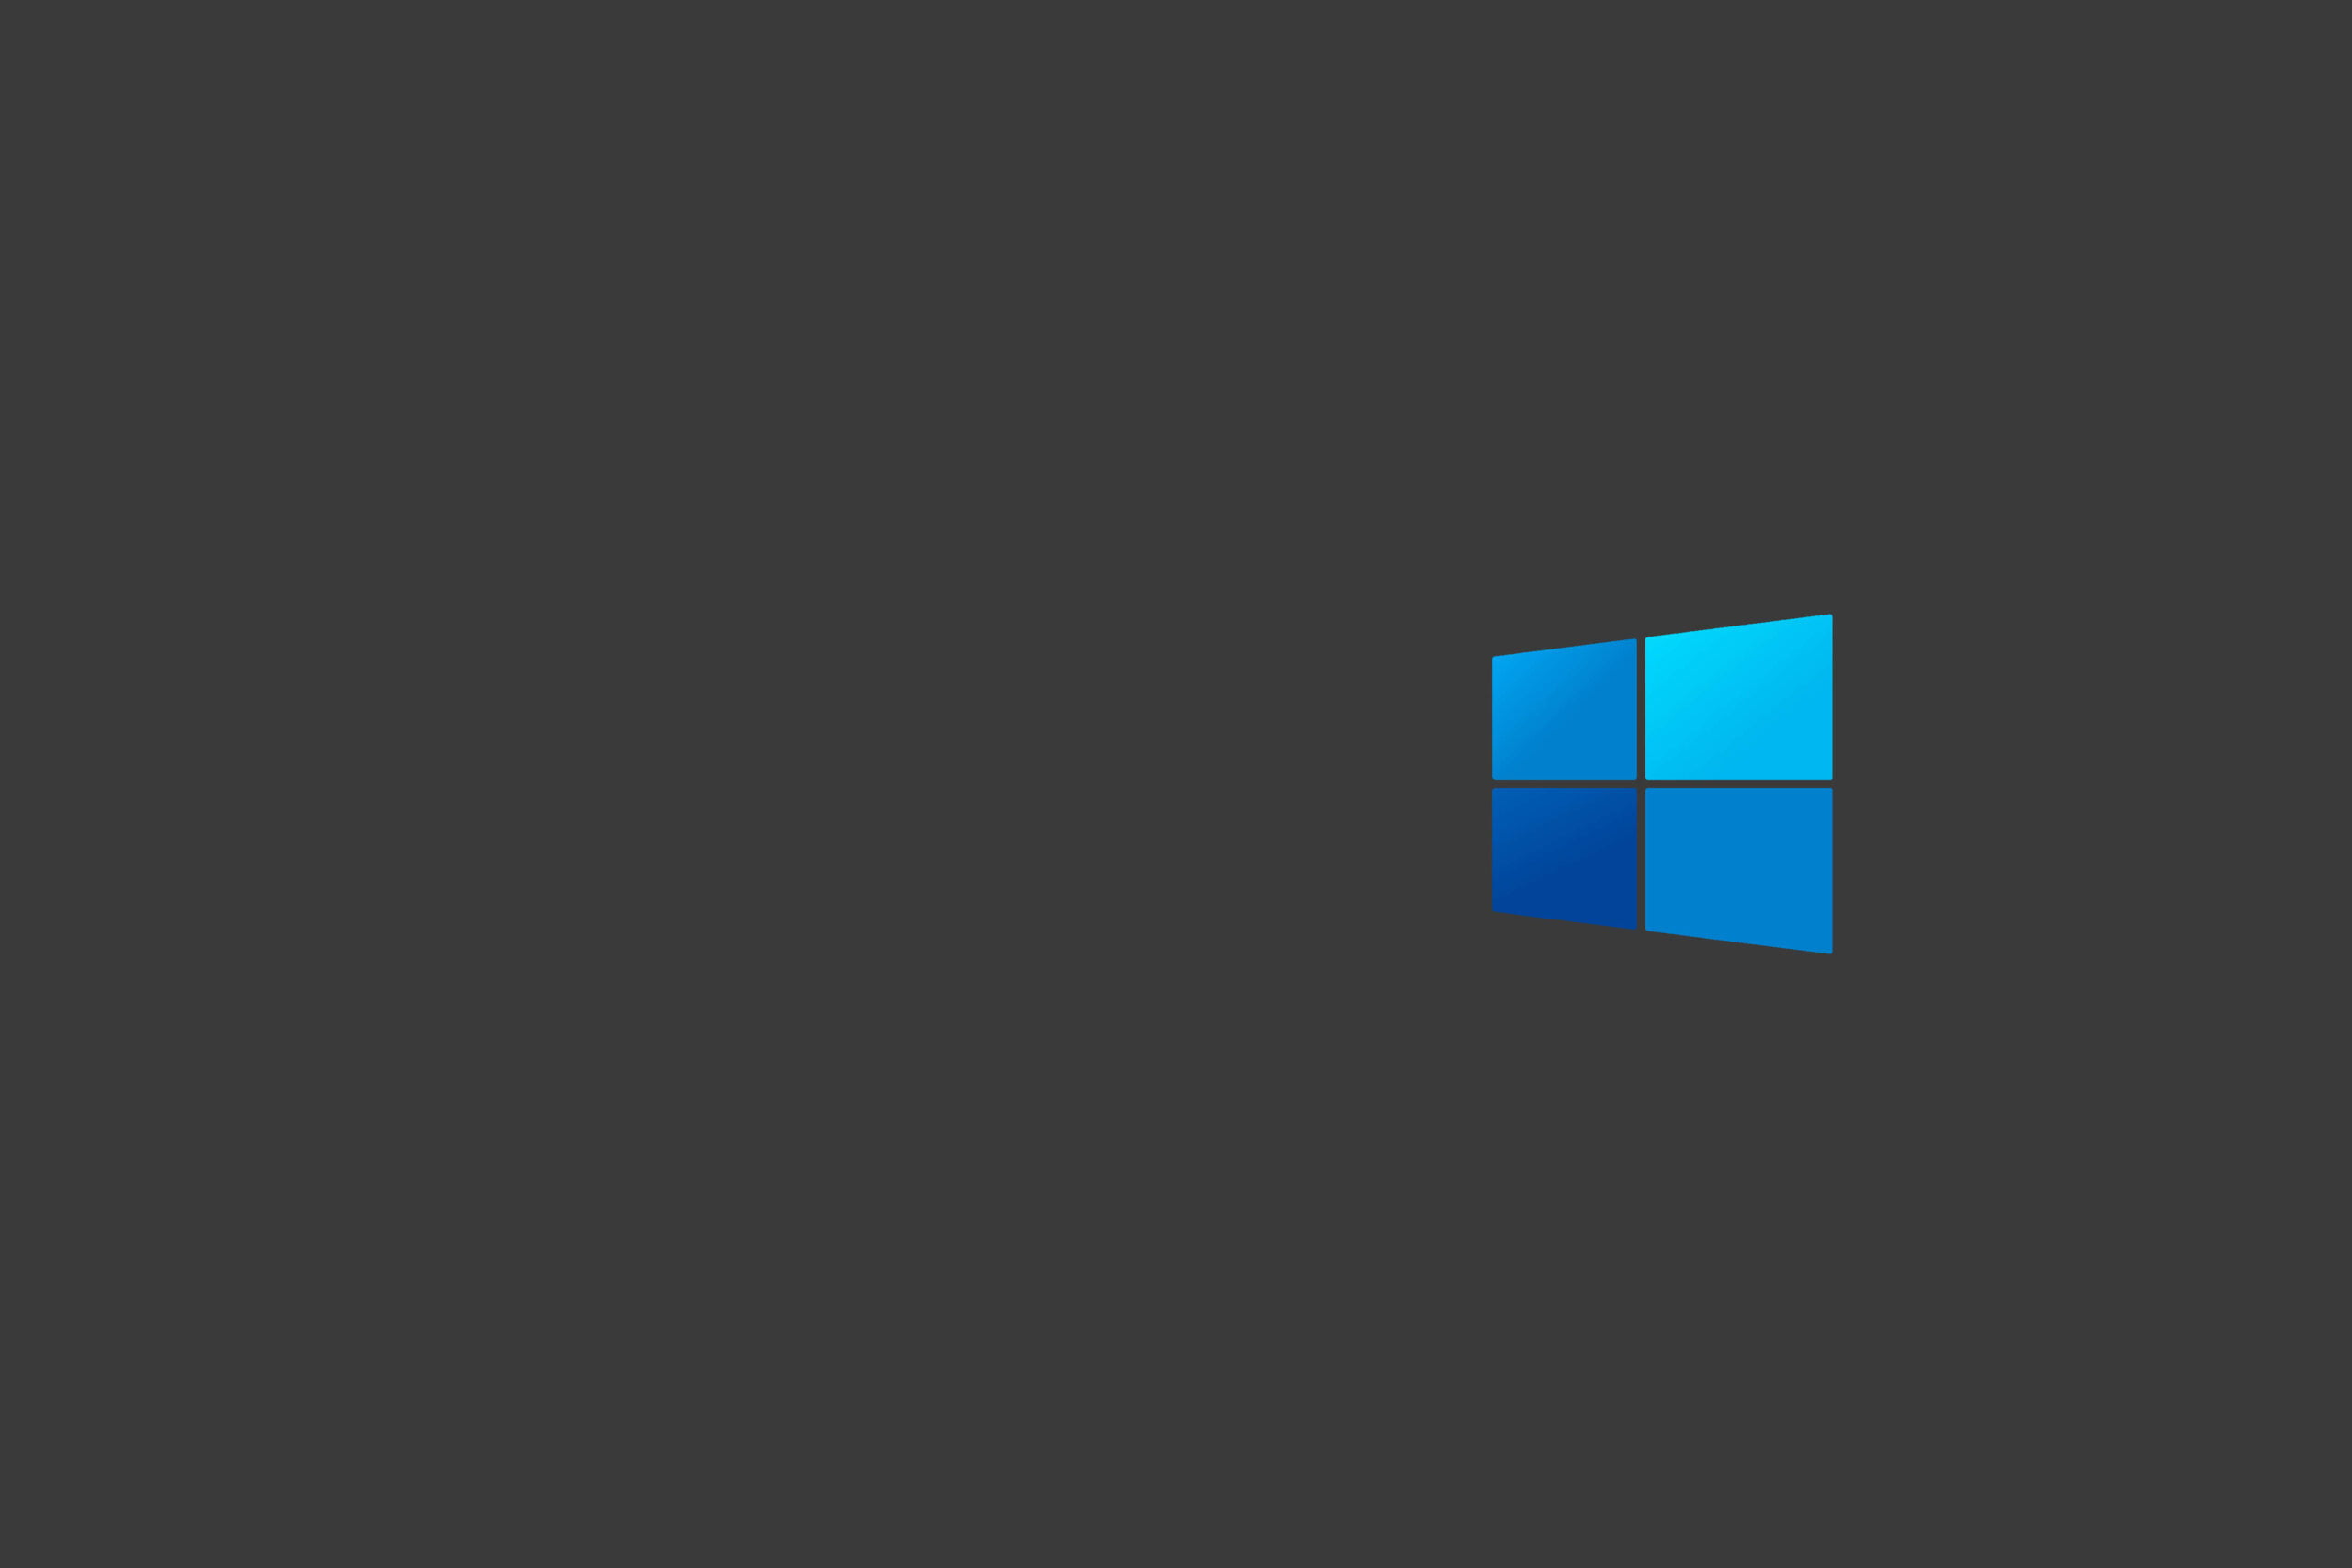 Wallpaper de Windows 10X